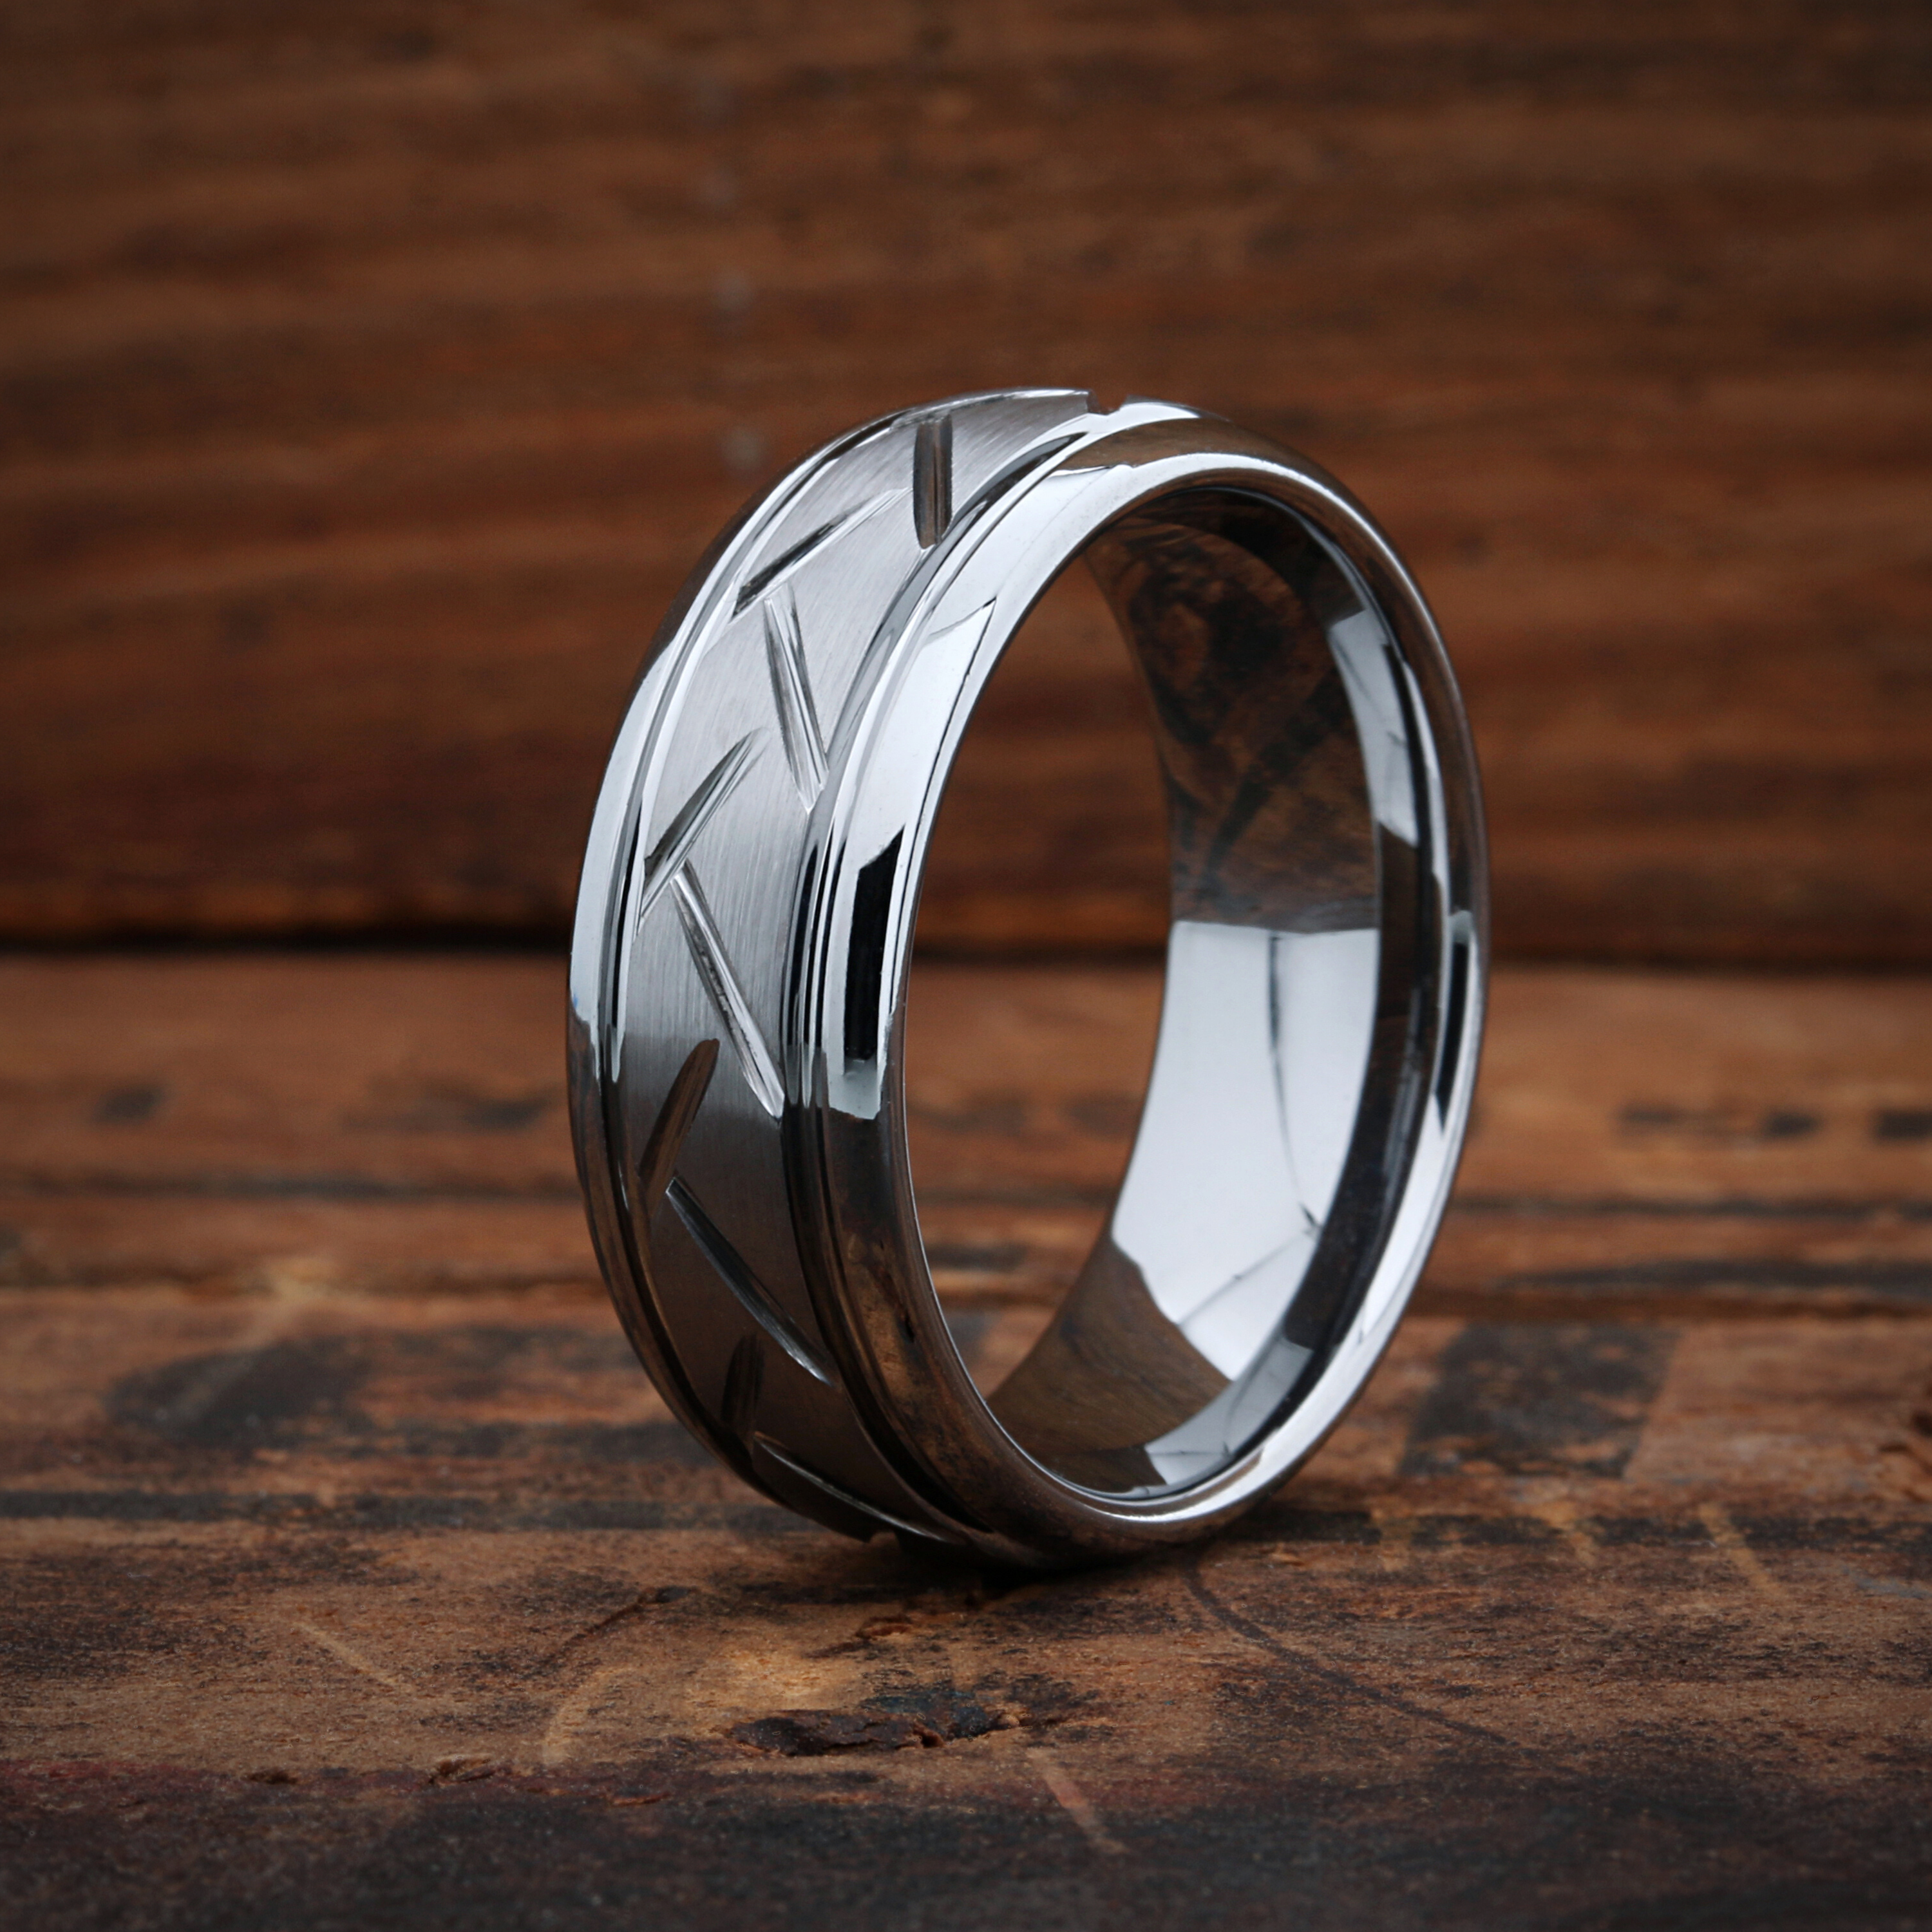 Buy TIGRADE 6MM Silver Titanium Engagement Ring Cubic Zirconia Wedding Band  for Men Women Size 5-12, Titanium, Cubic Zirconia at Amazon.in